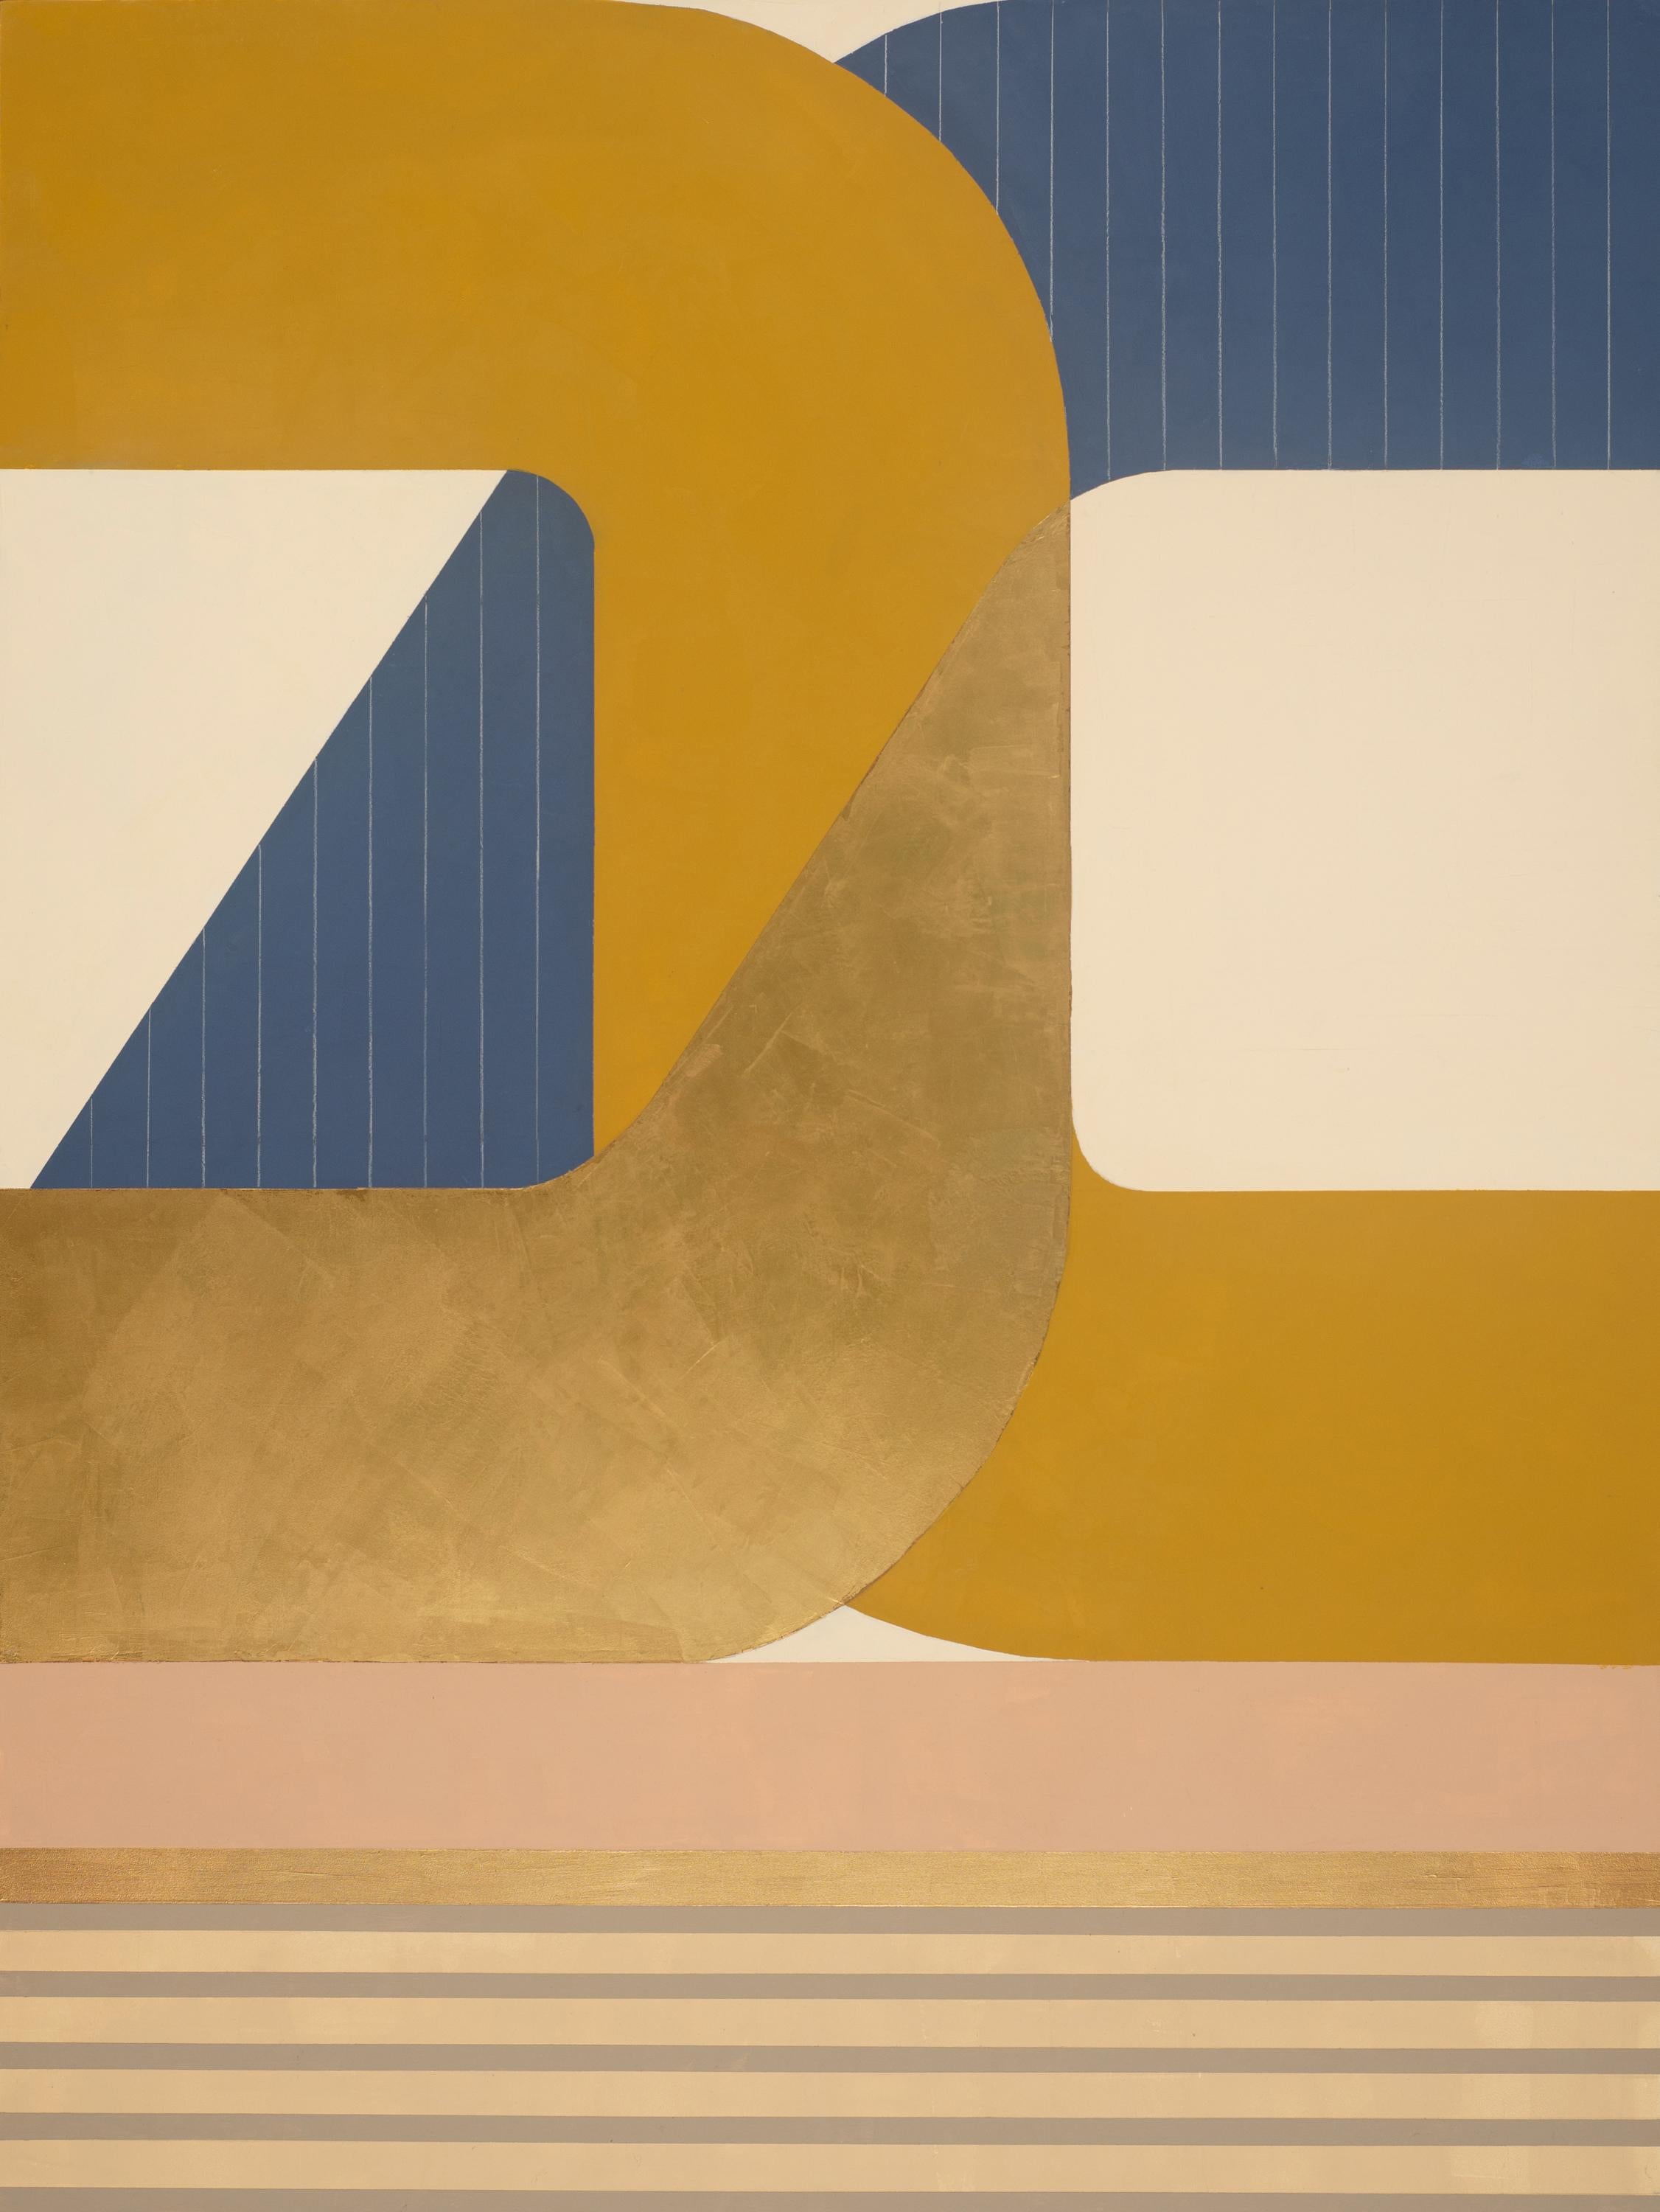 Paradigm Shift, striking modern geometric abstract painting, bright palette